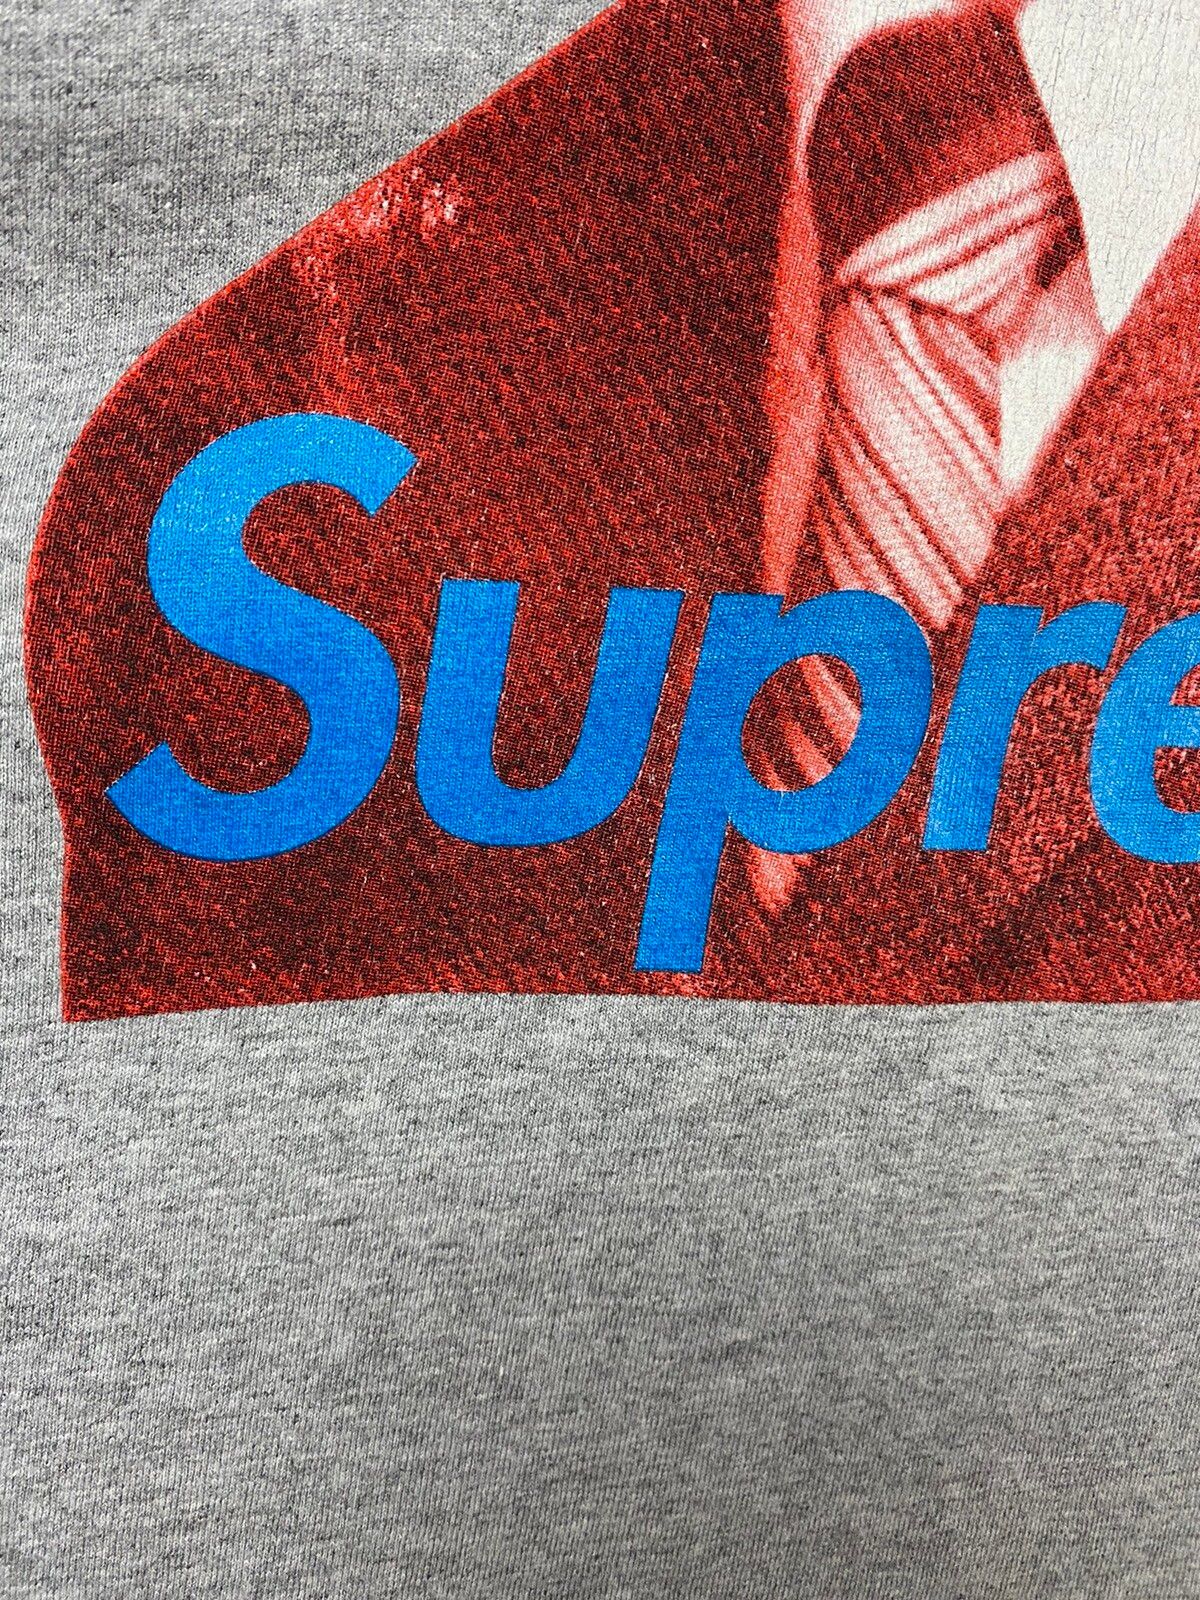 Supreme 2015 Supreme Undercover Synhead Tee Shirt Grey Medium Size US M / EU 48-50 / 2 - 3 Thumbnail